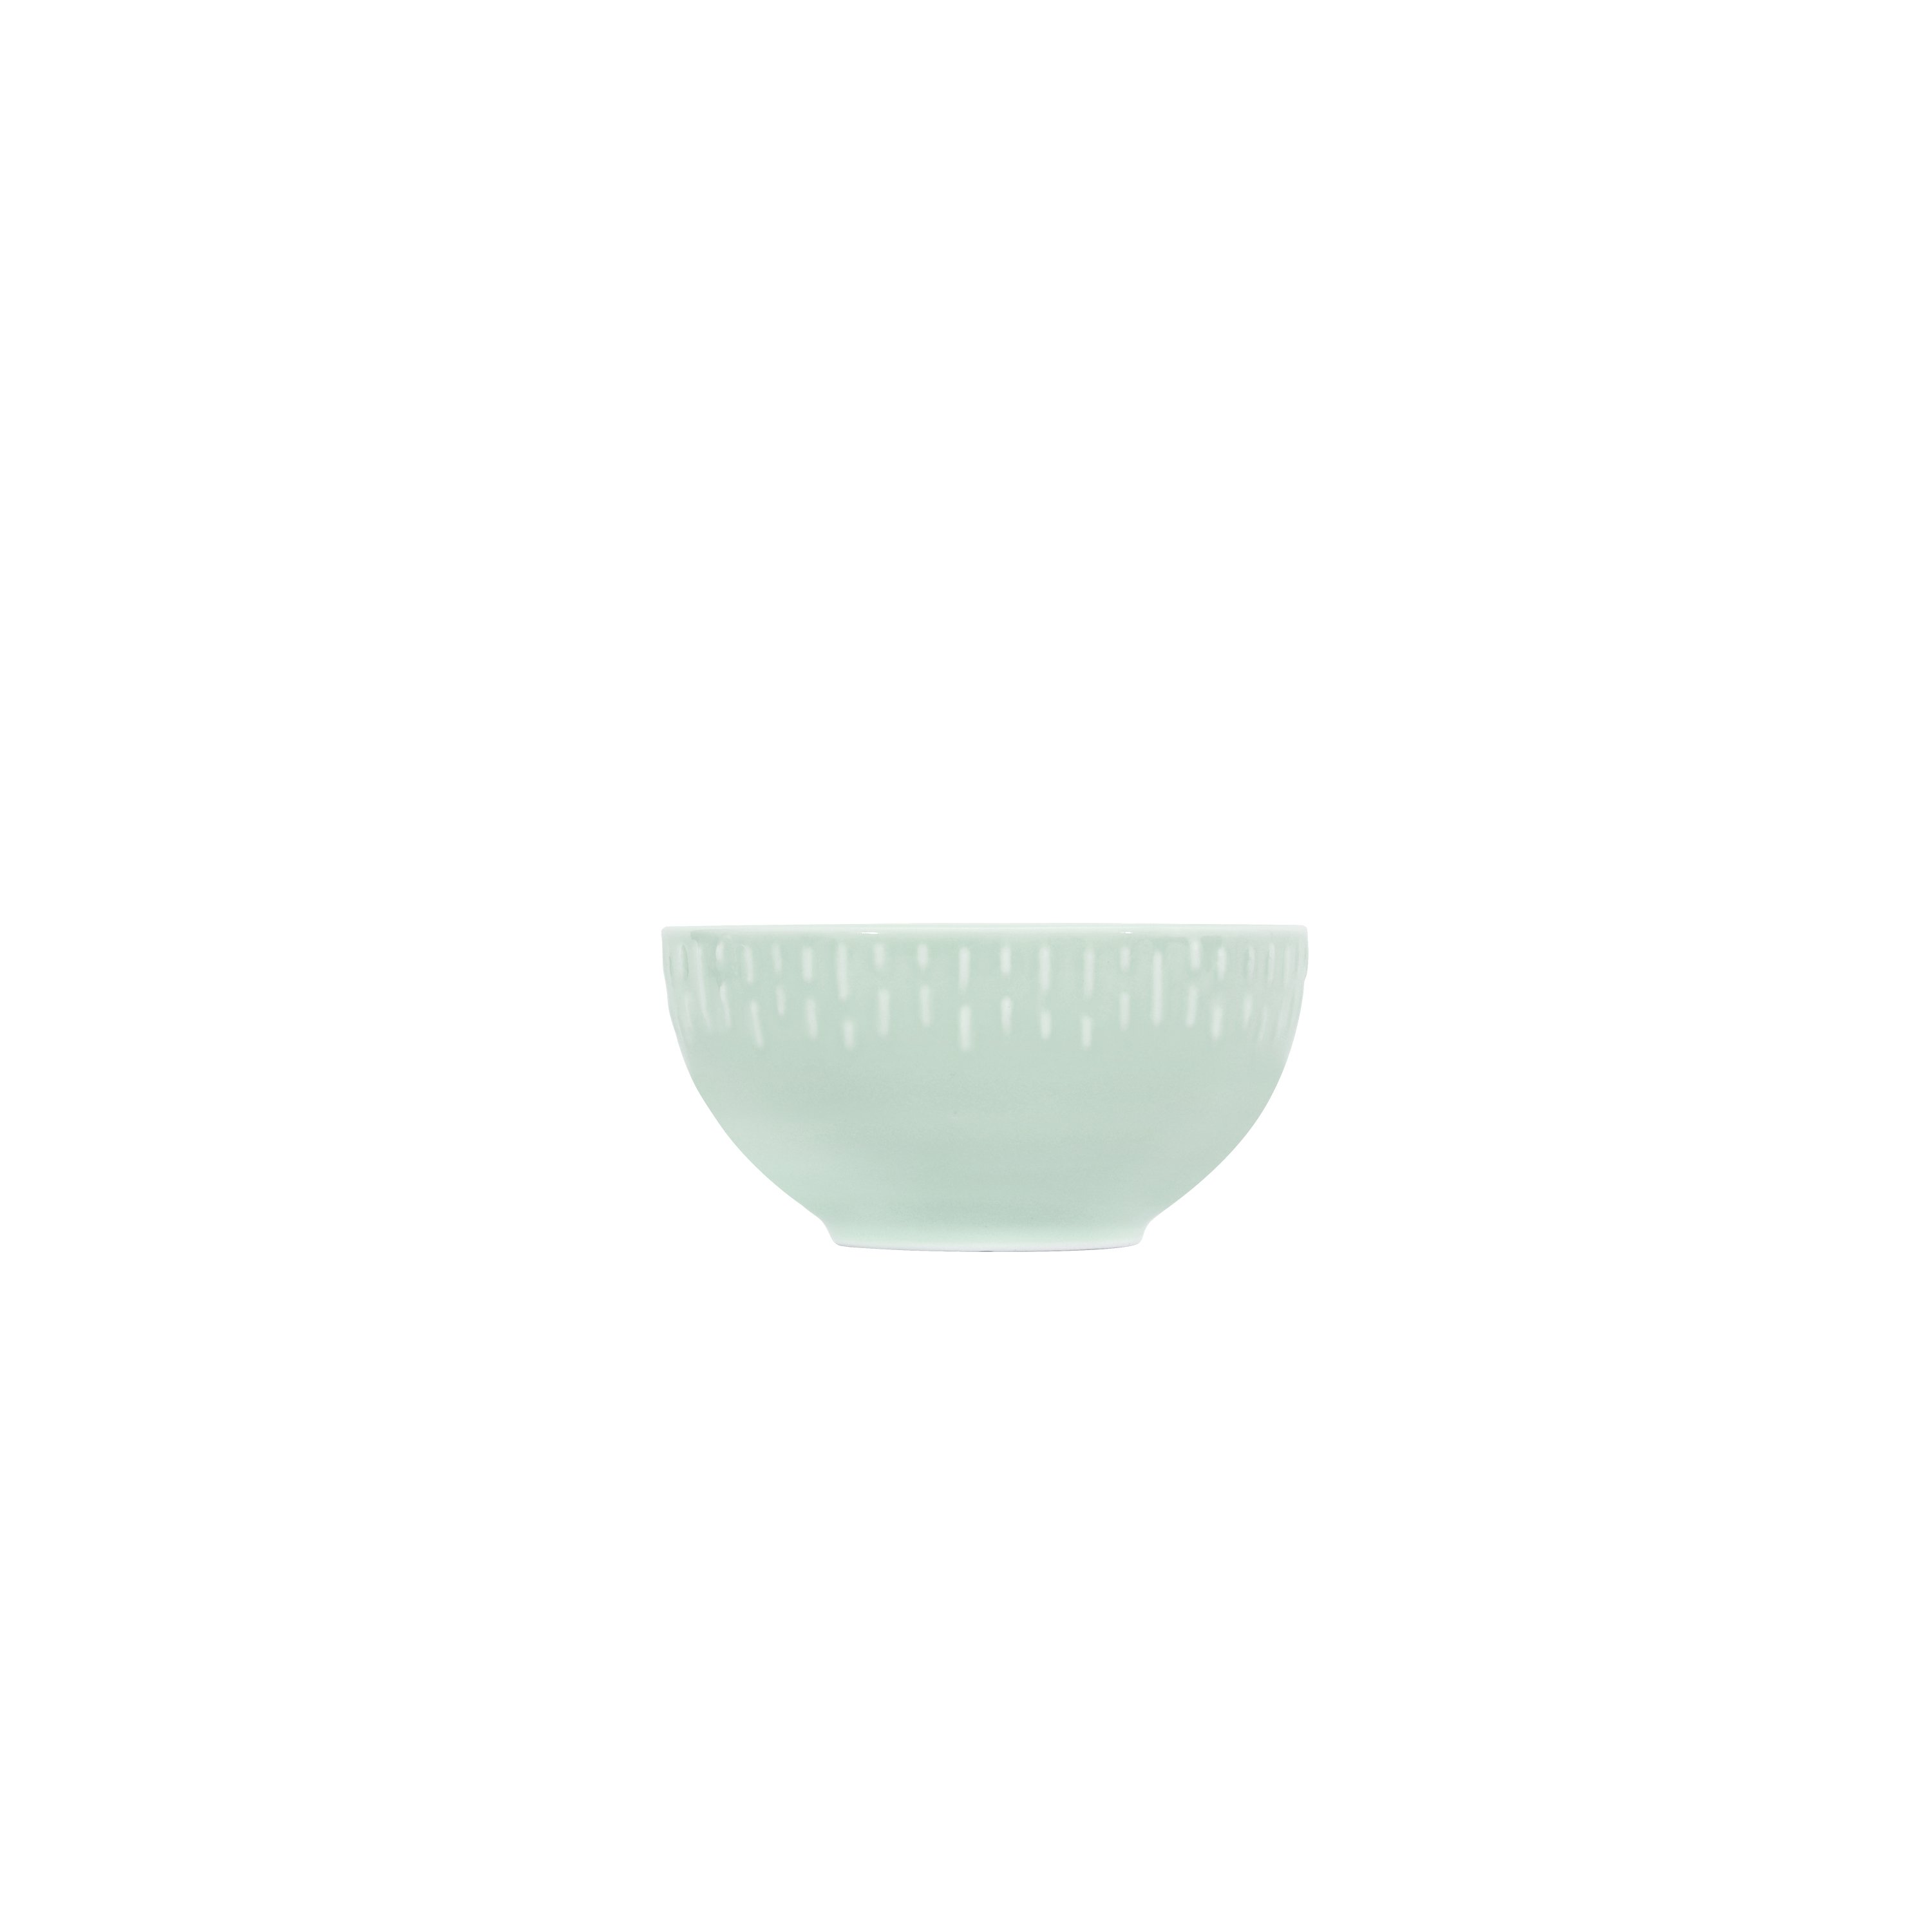 Aida - Life in Colour - Confetti - Pistachio bowl w/relief porcelain (13487)